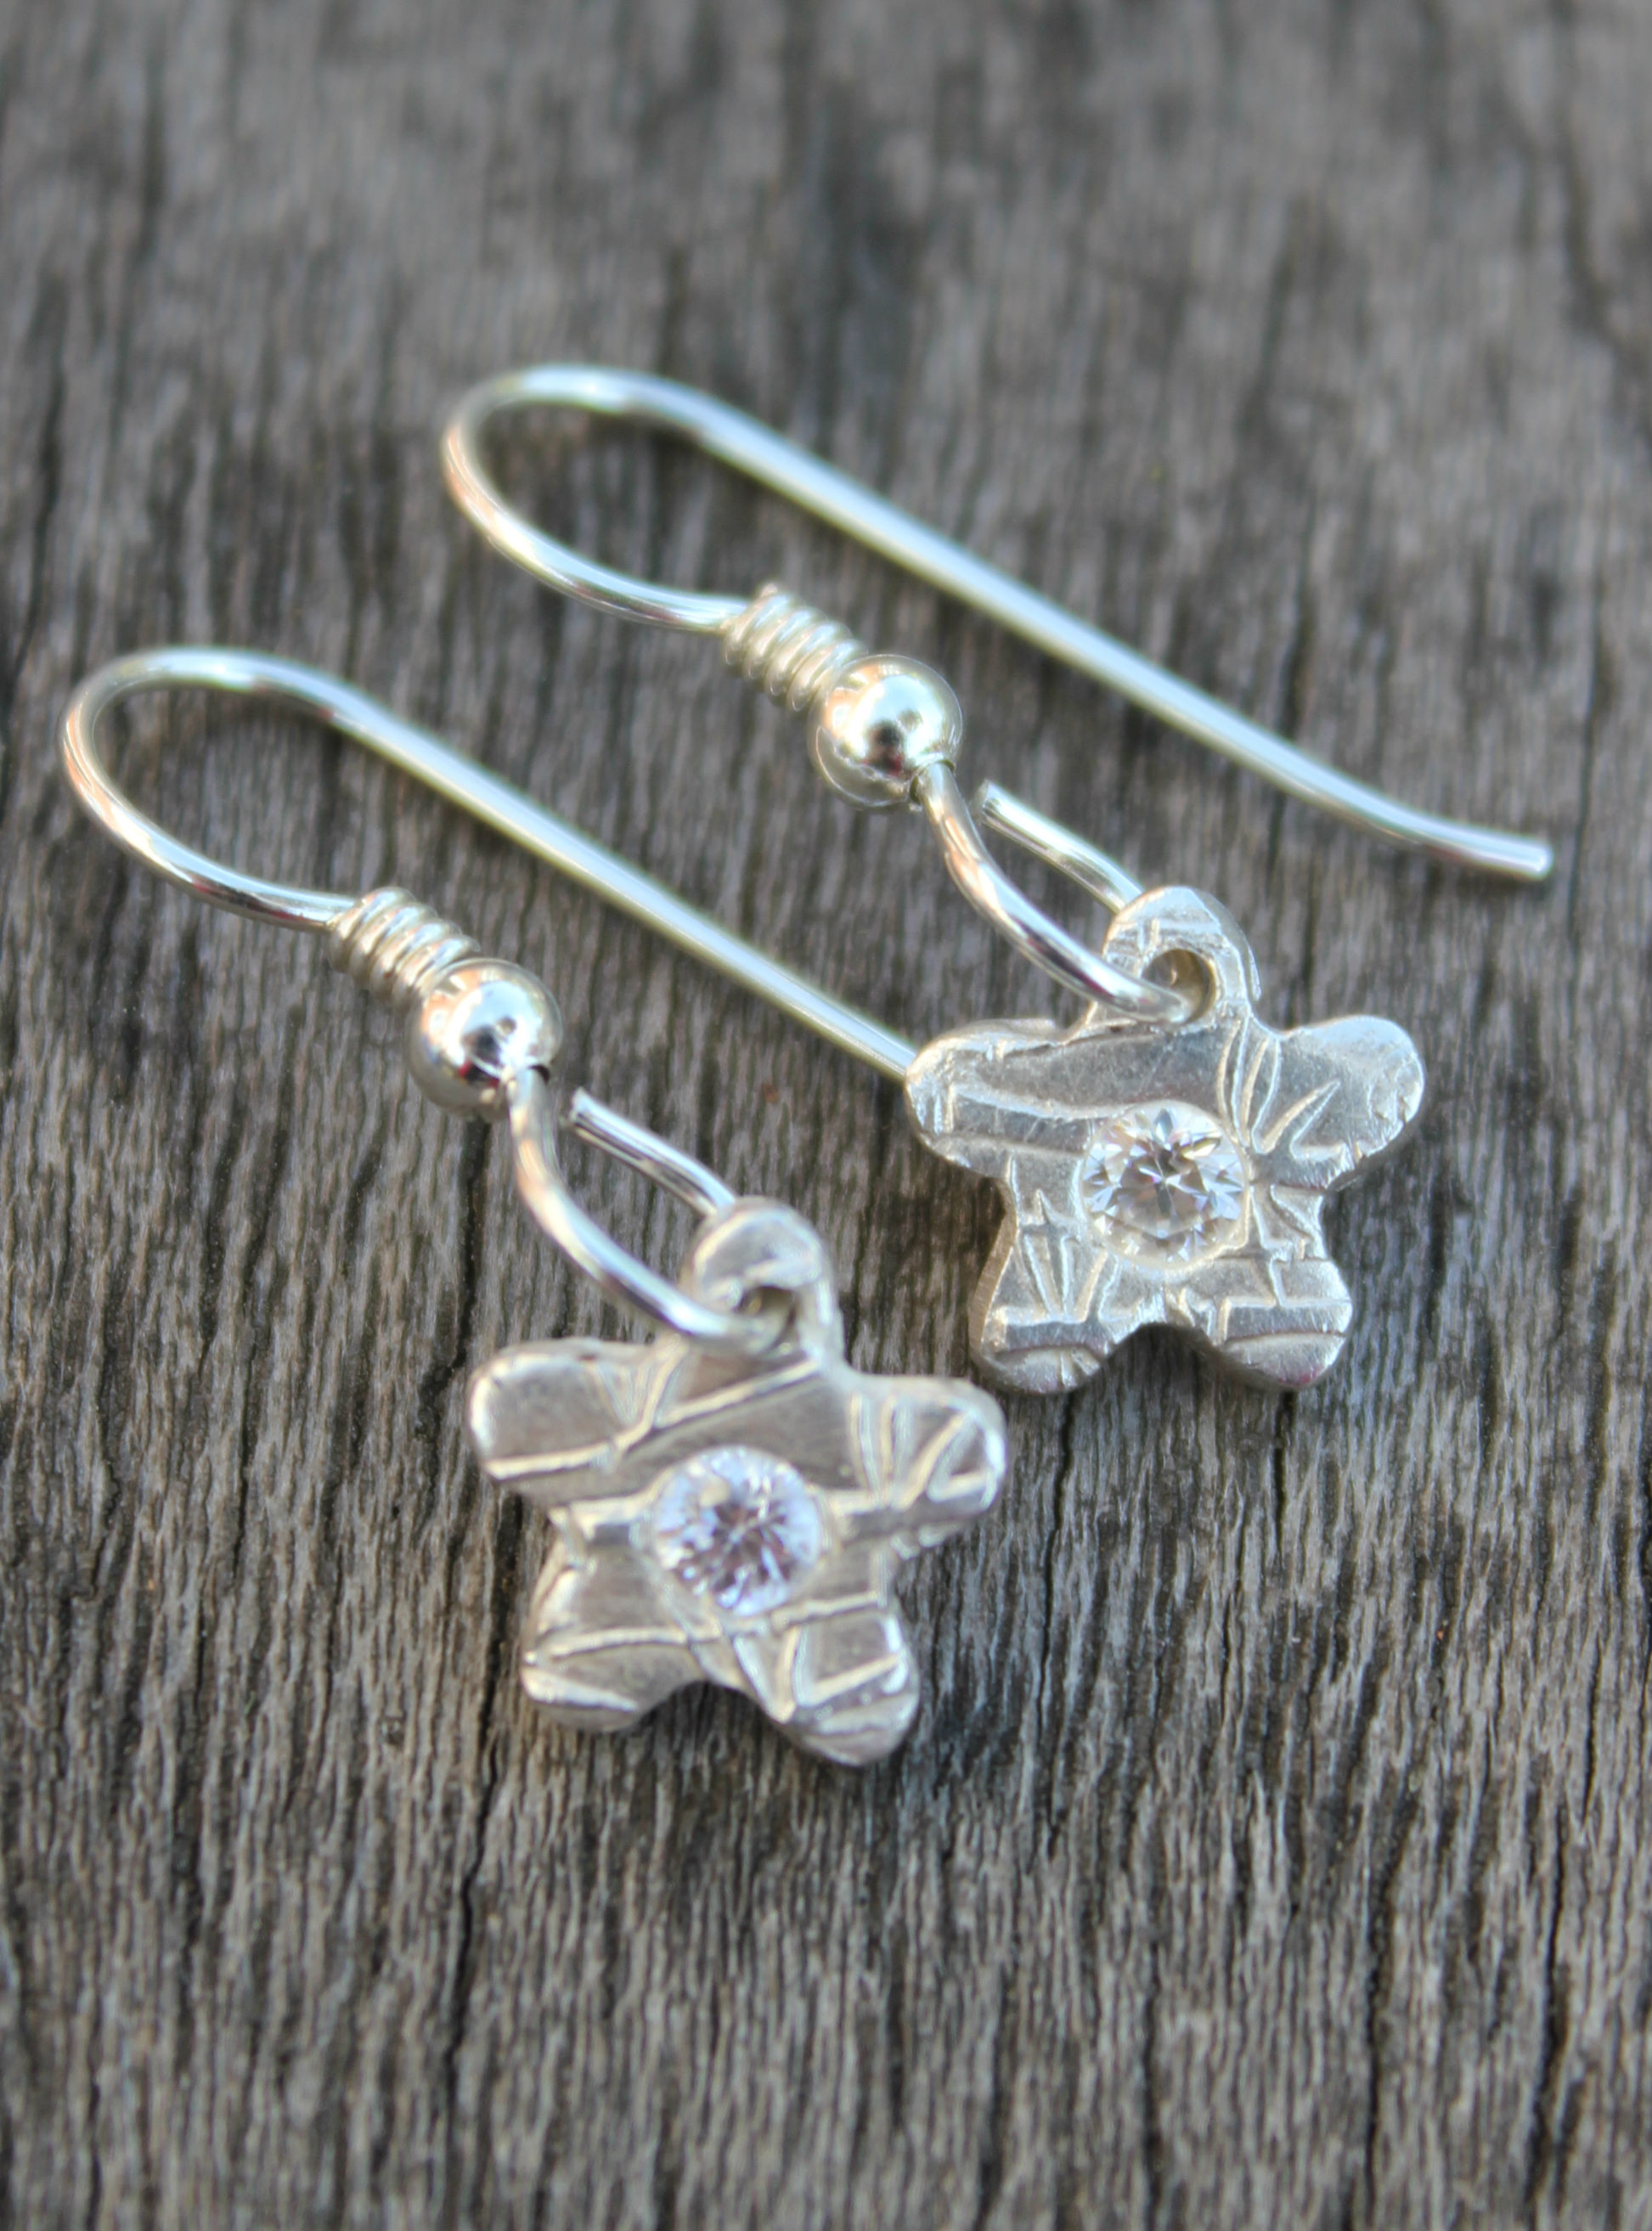 White topaz flower earrings by little silver hedgehog.JPG